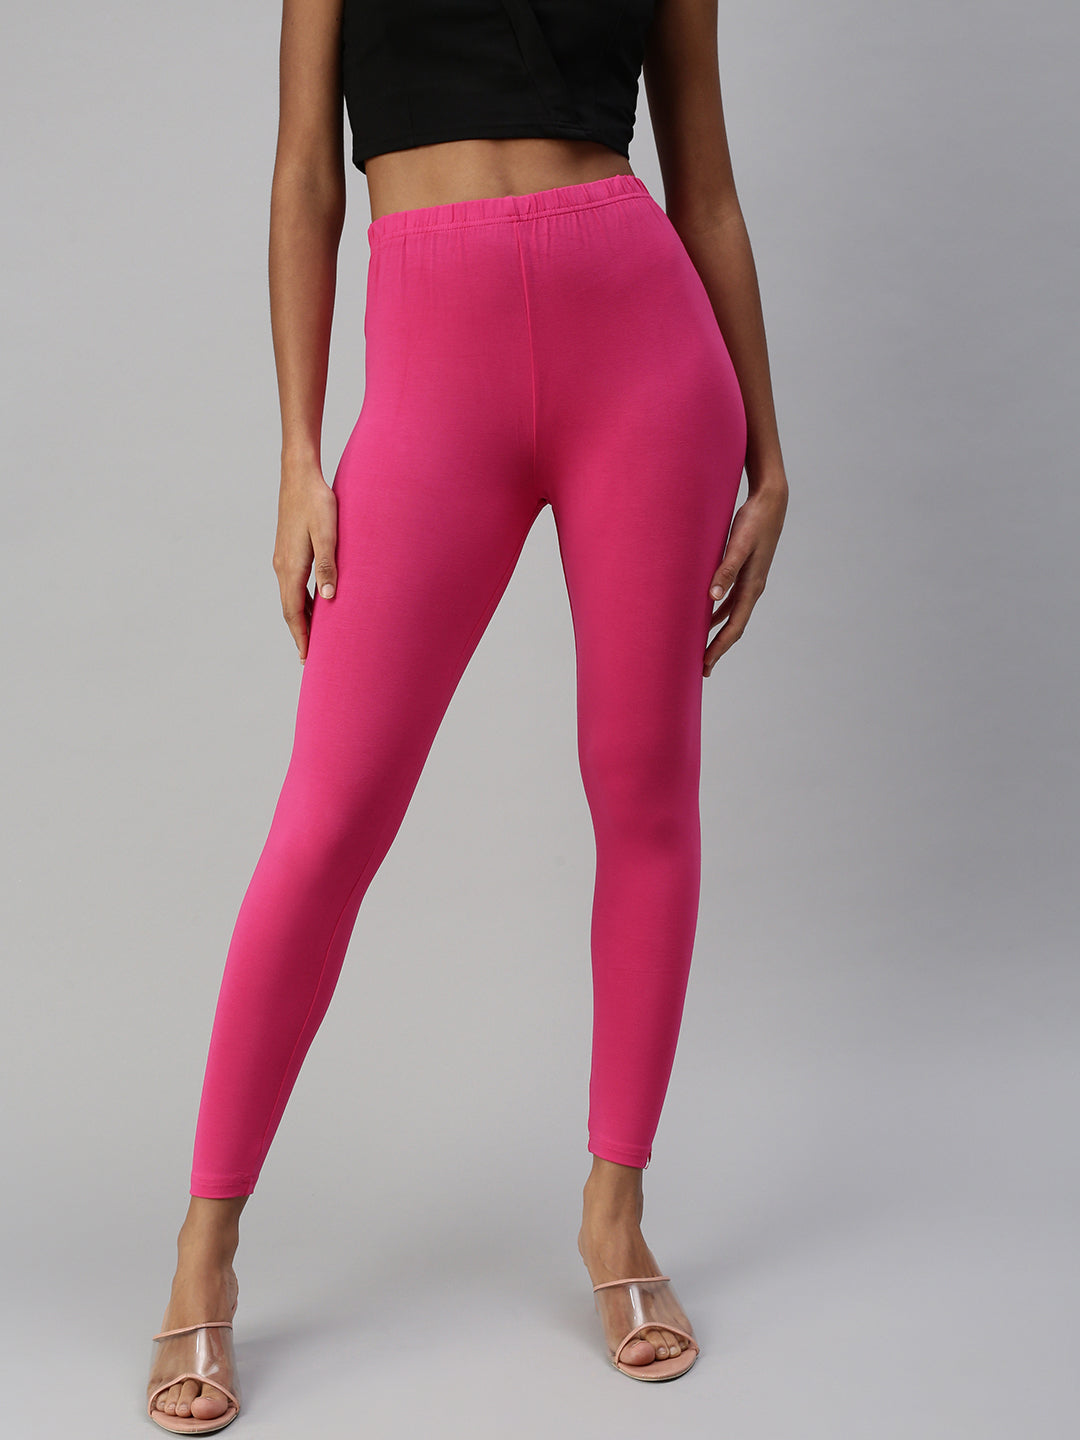 Nike Air Ribbed pink high waisted leggings | ASOS